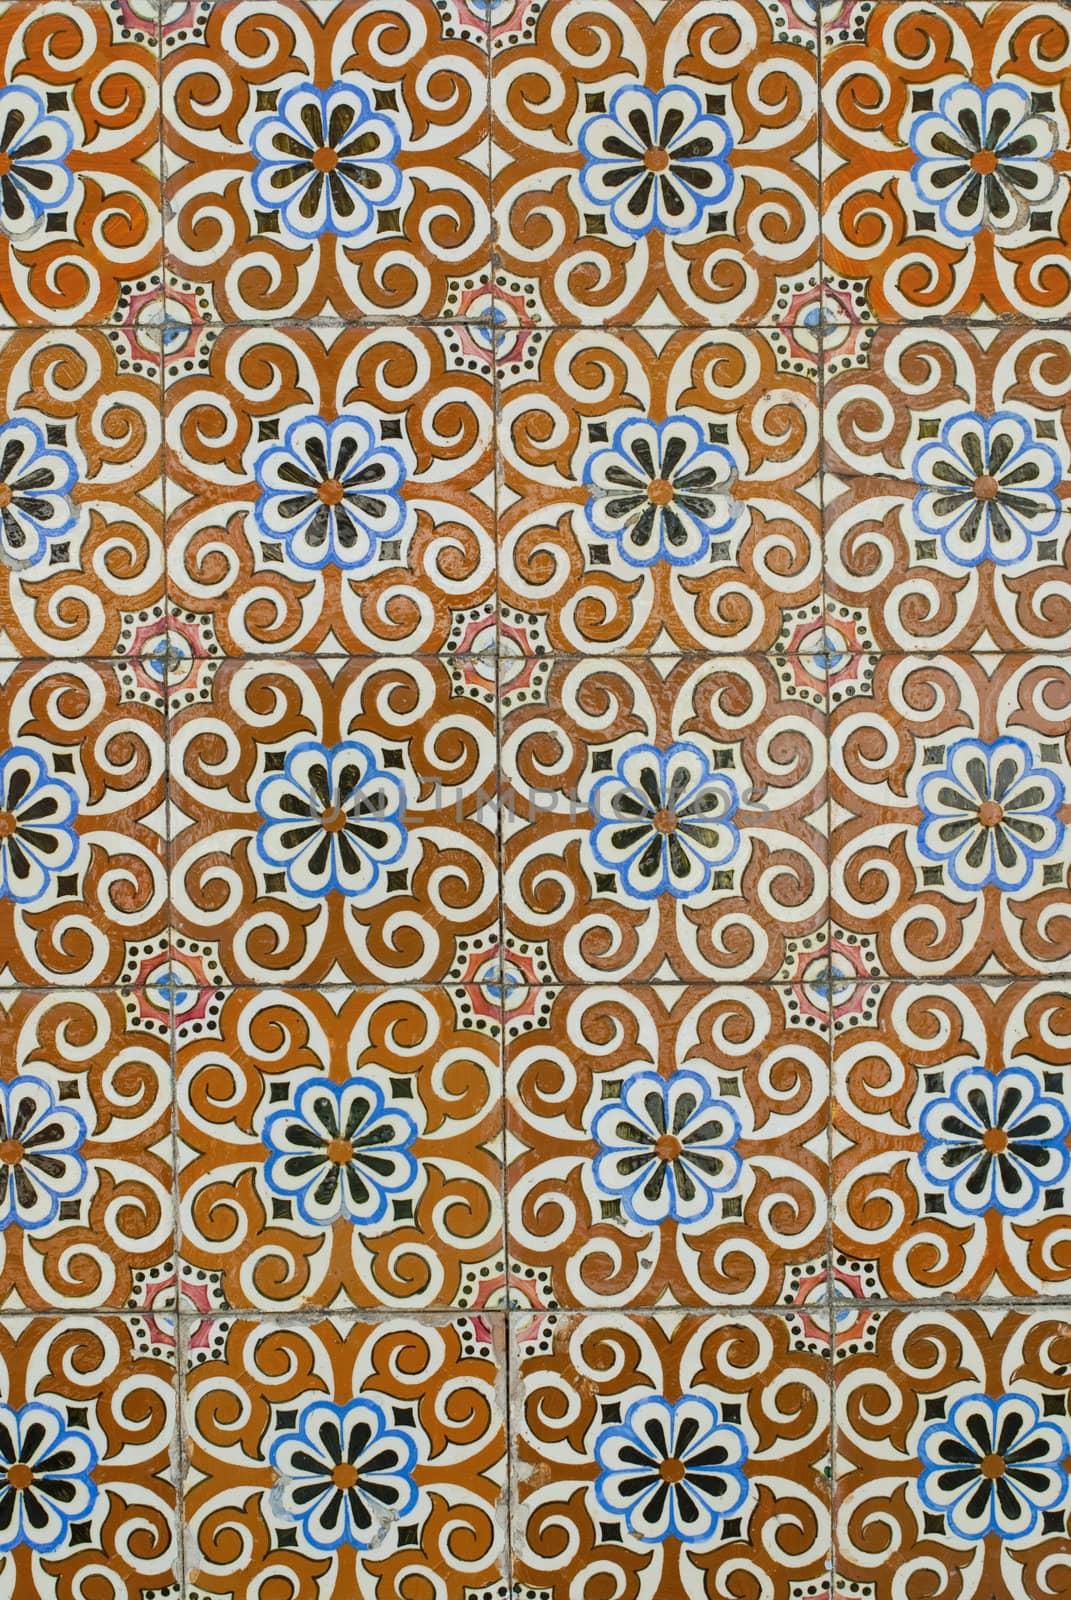 Portuguese glazed tiles 190 by homydesign